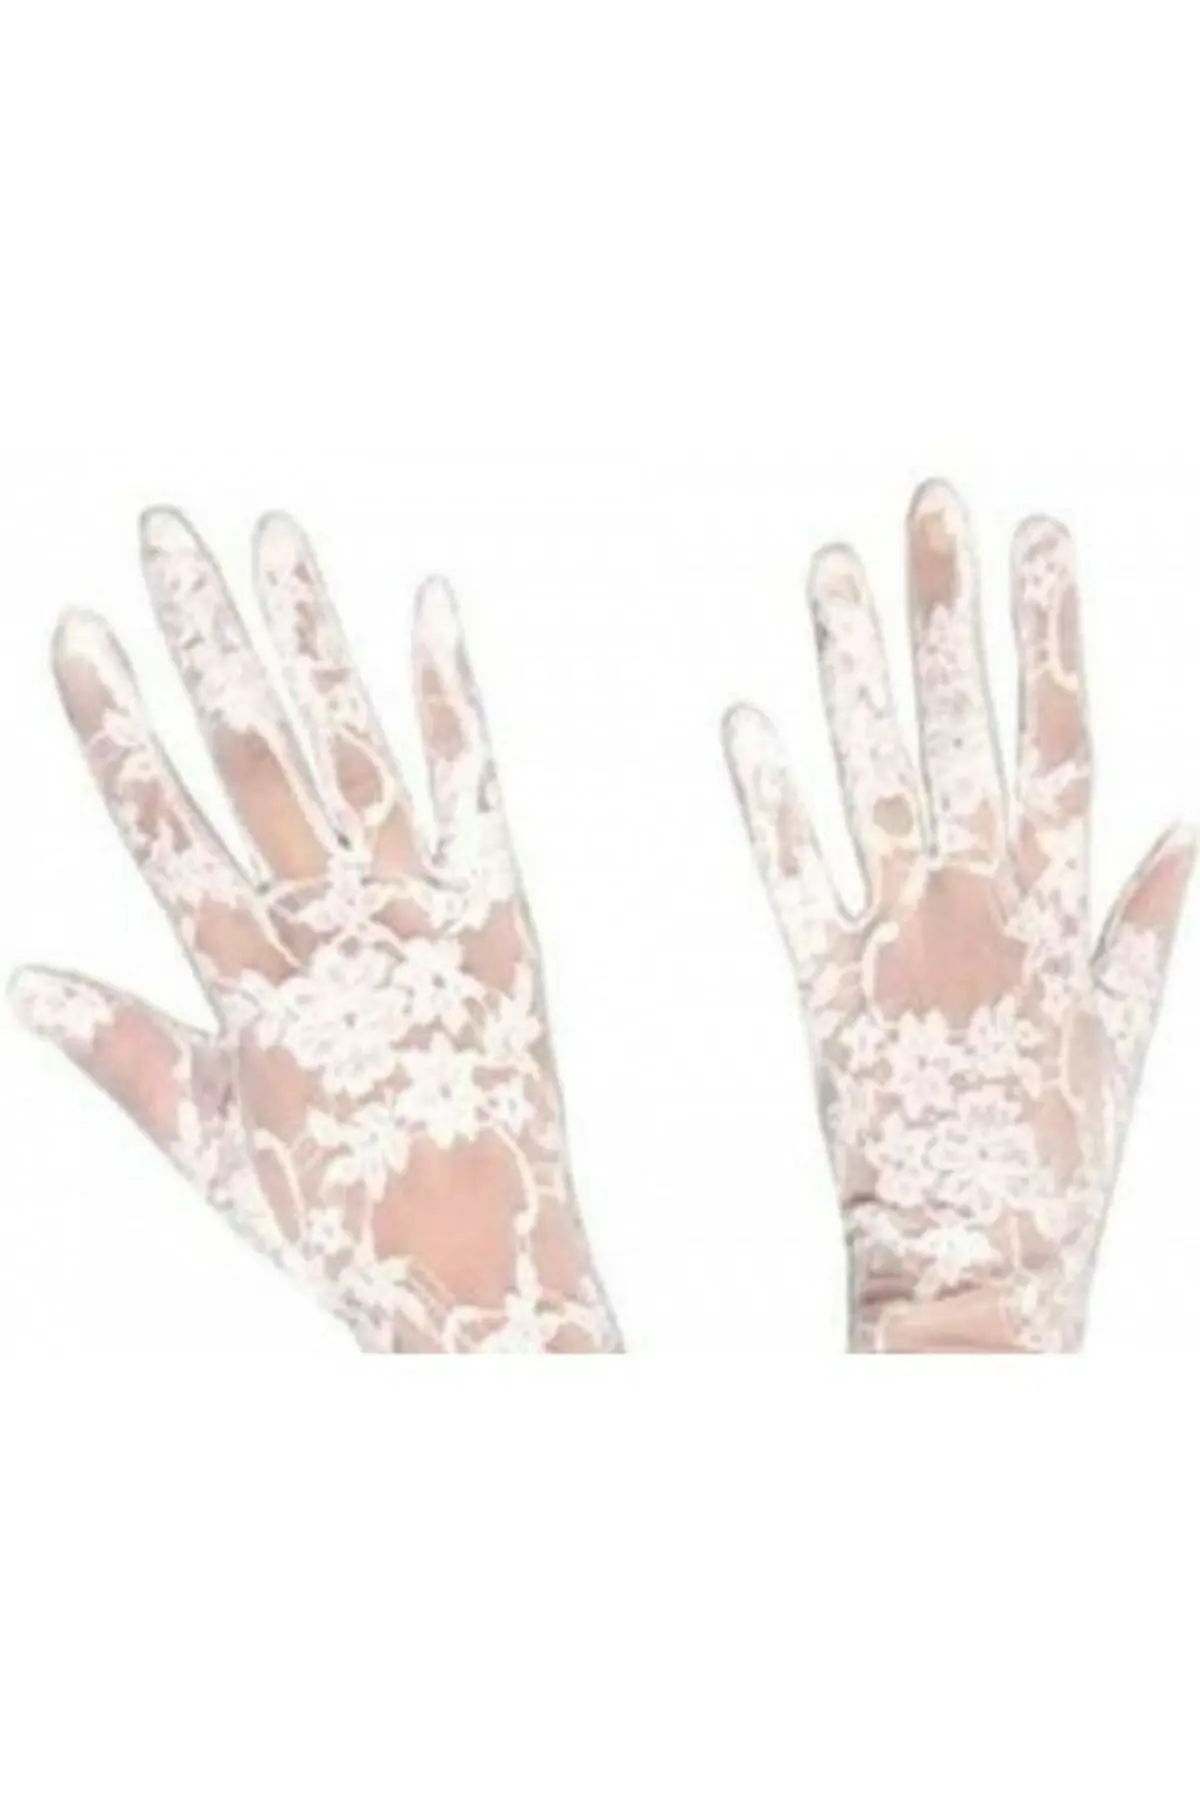 

Ruched Bridal Gloves-White Short Lace Mesh Bridal Transparent Elegant Fishnet Silk Tulle Guipure